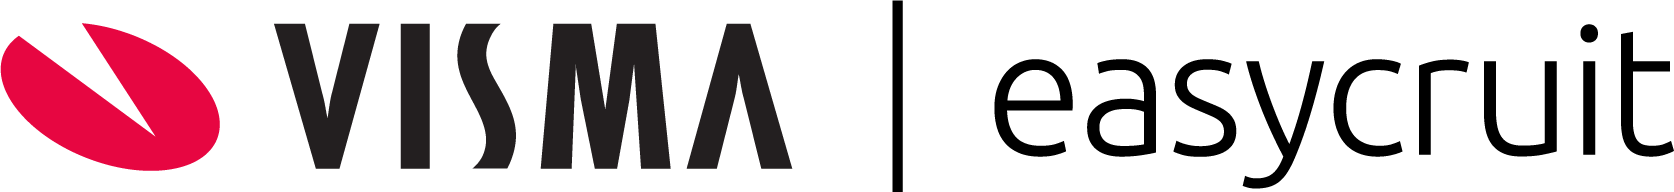 Visma Easycruit logo